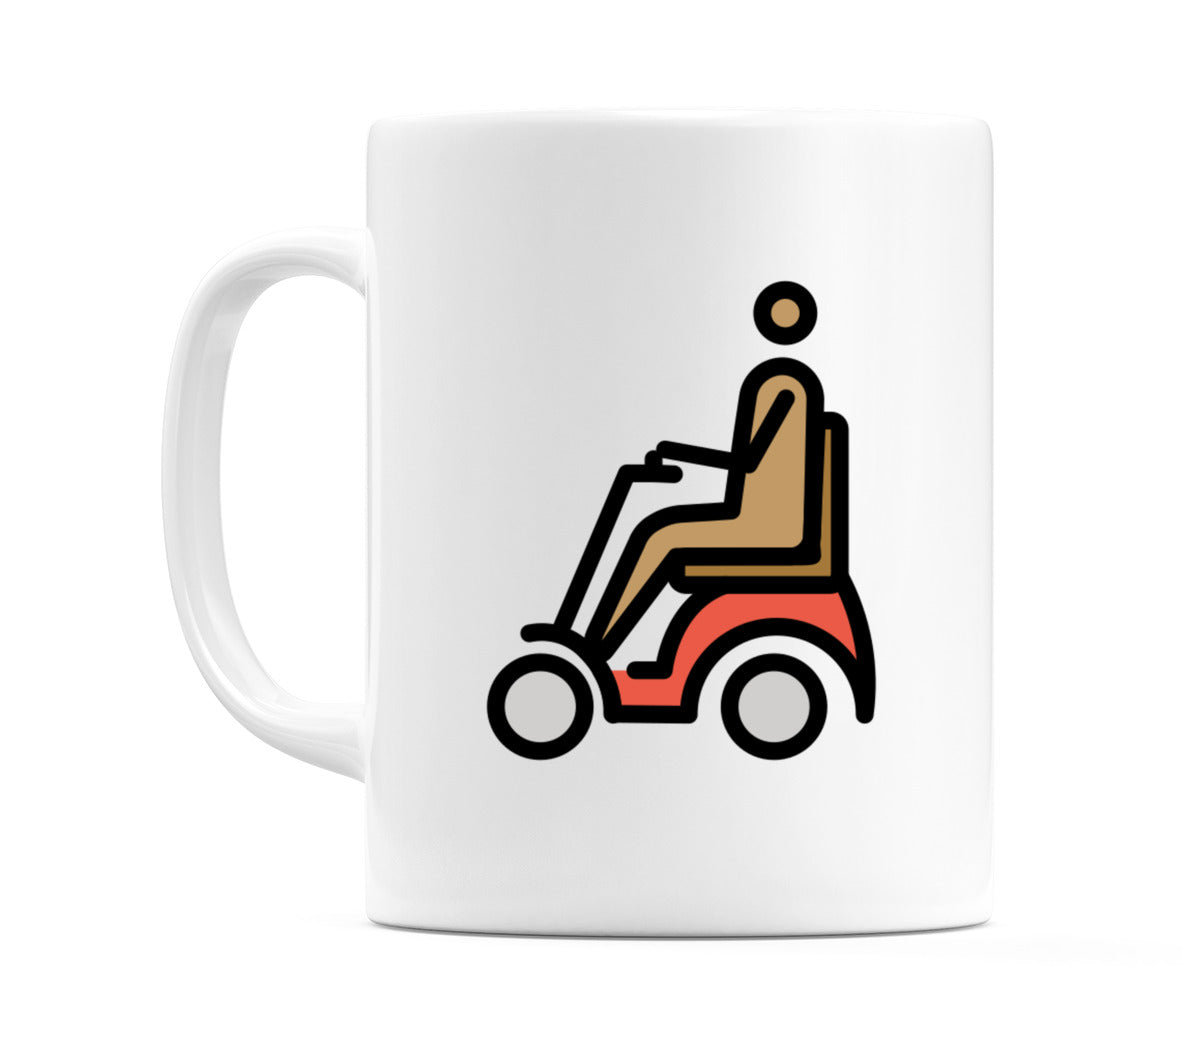 Male In Motorized Wheelchair: Medium Skin Tone Emoji Mug